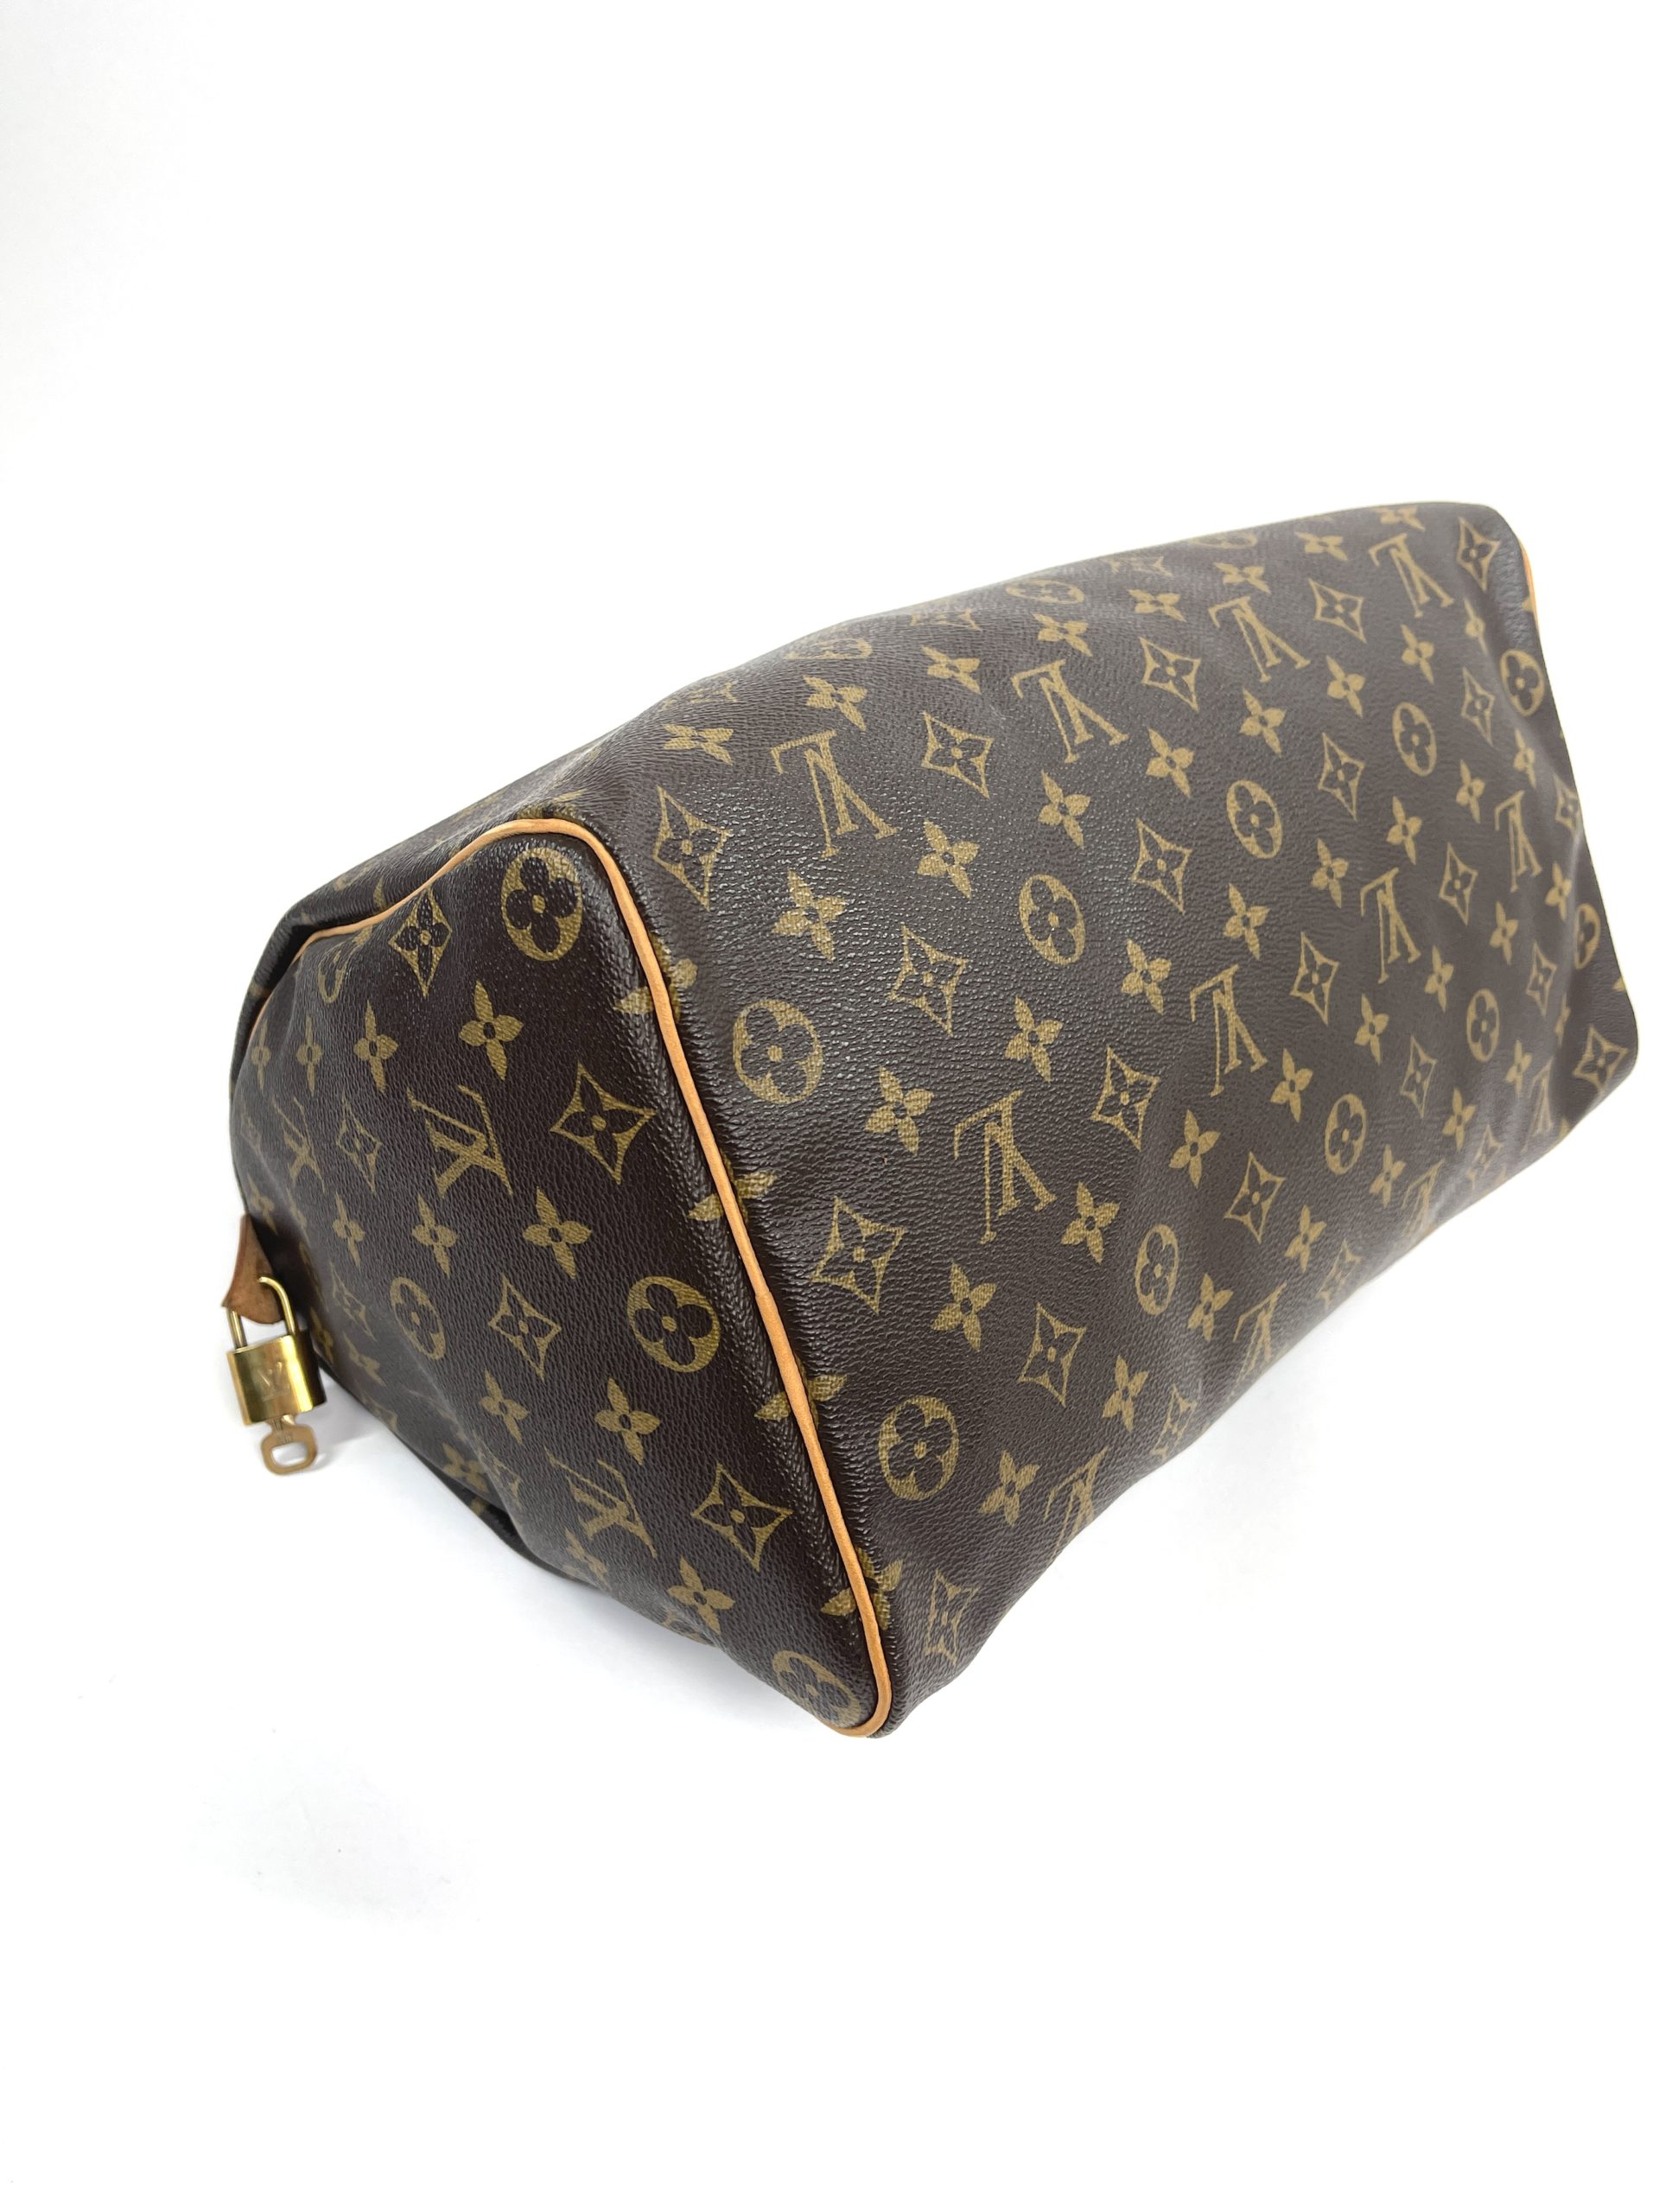 Louis Vuitton Speedy 35 Handbag Purse Green Monogramouflage M95773 AA3008  88187